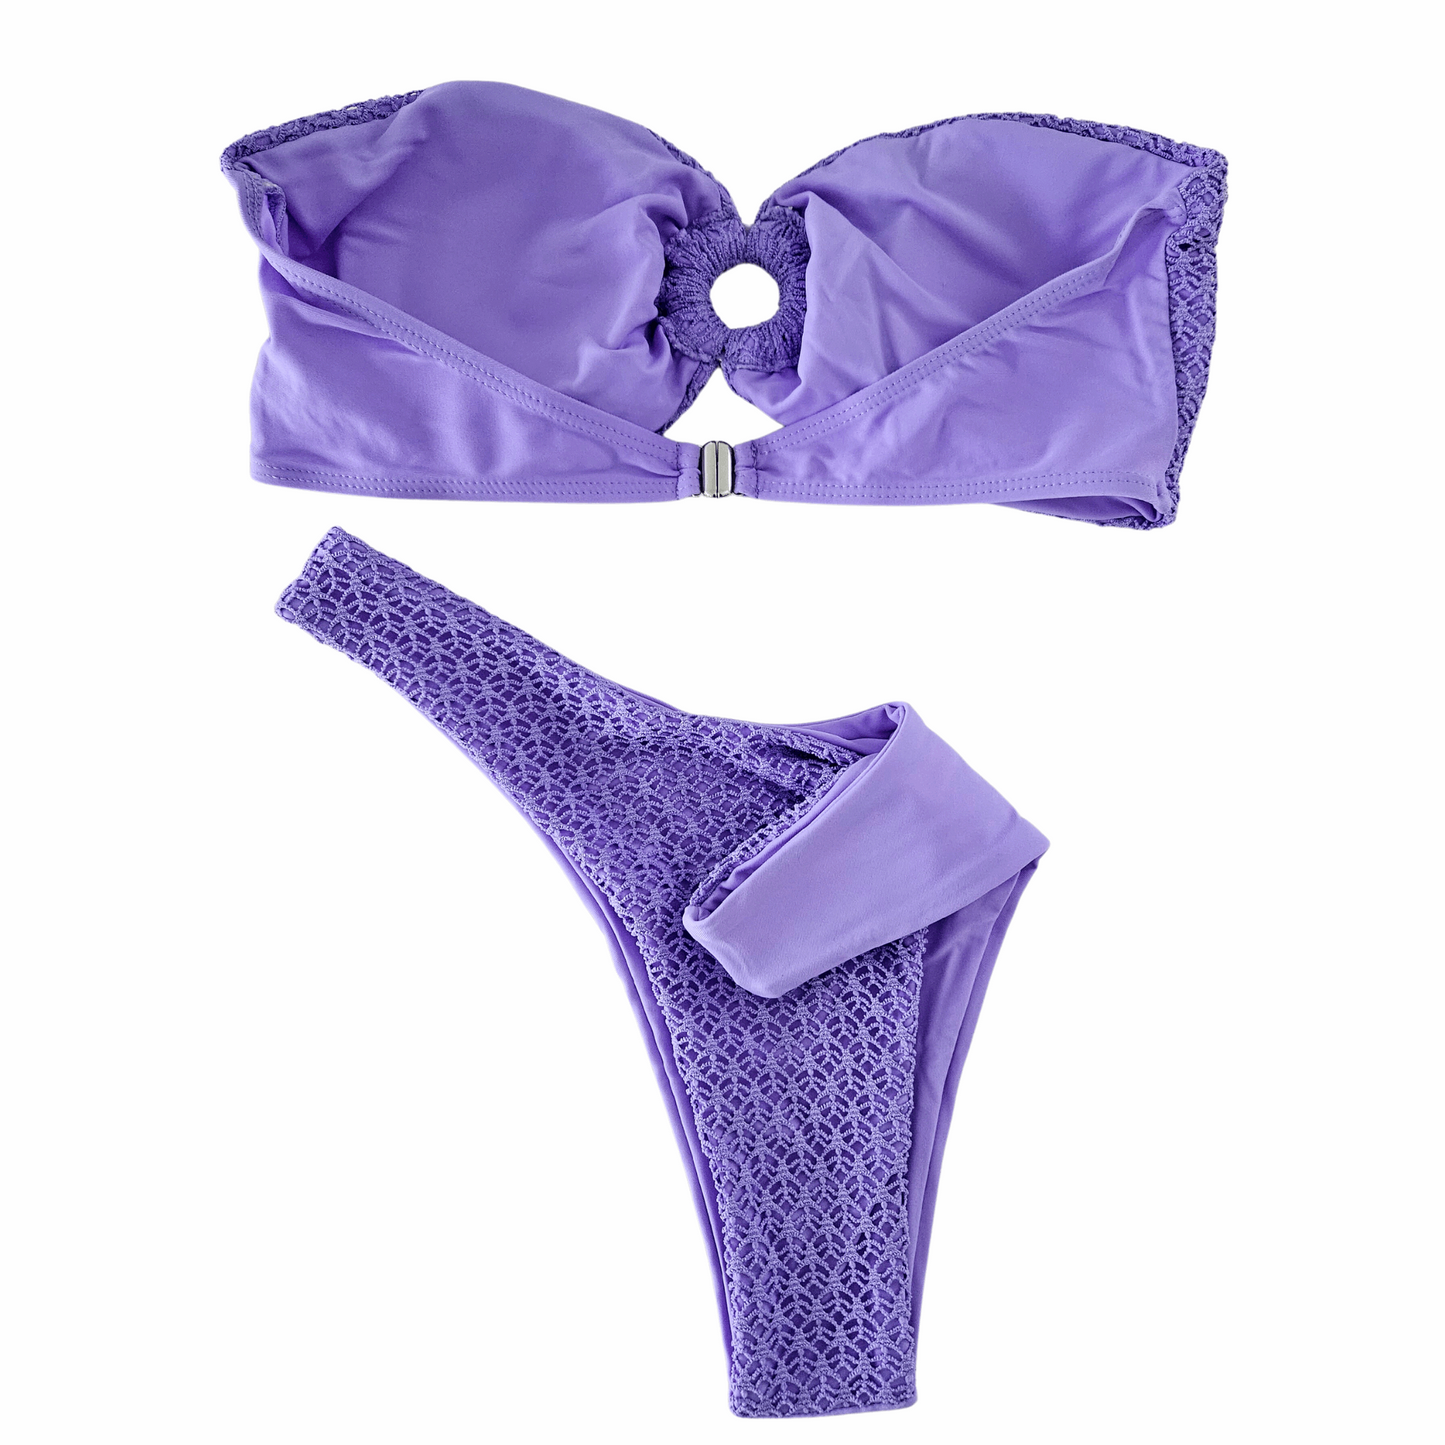 Back view of the Rita Rosa Brazilian Beachwear Bandeau Textured Purple Tube Top Thong Bikini Set